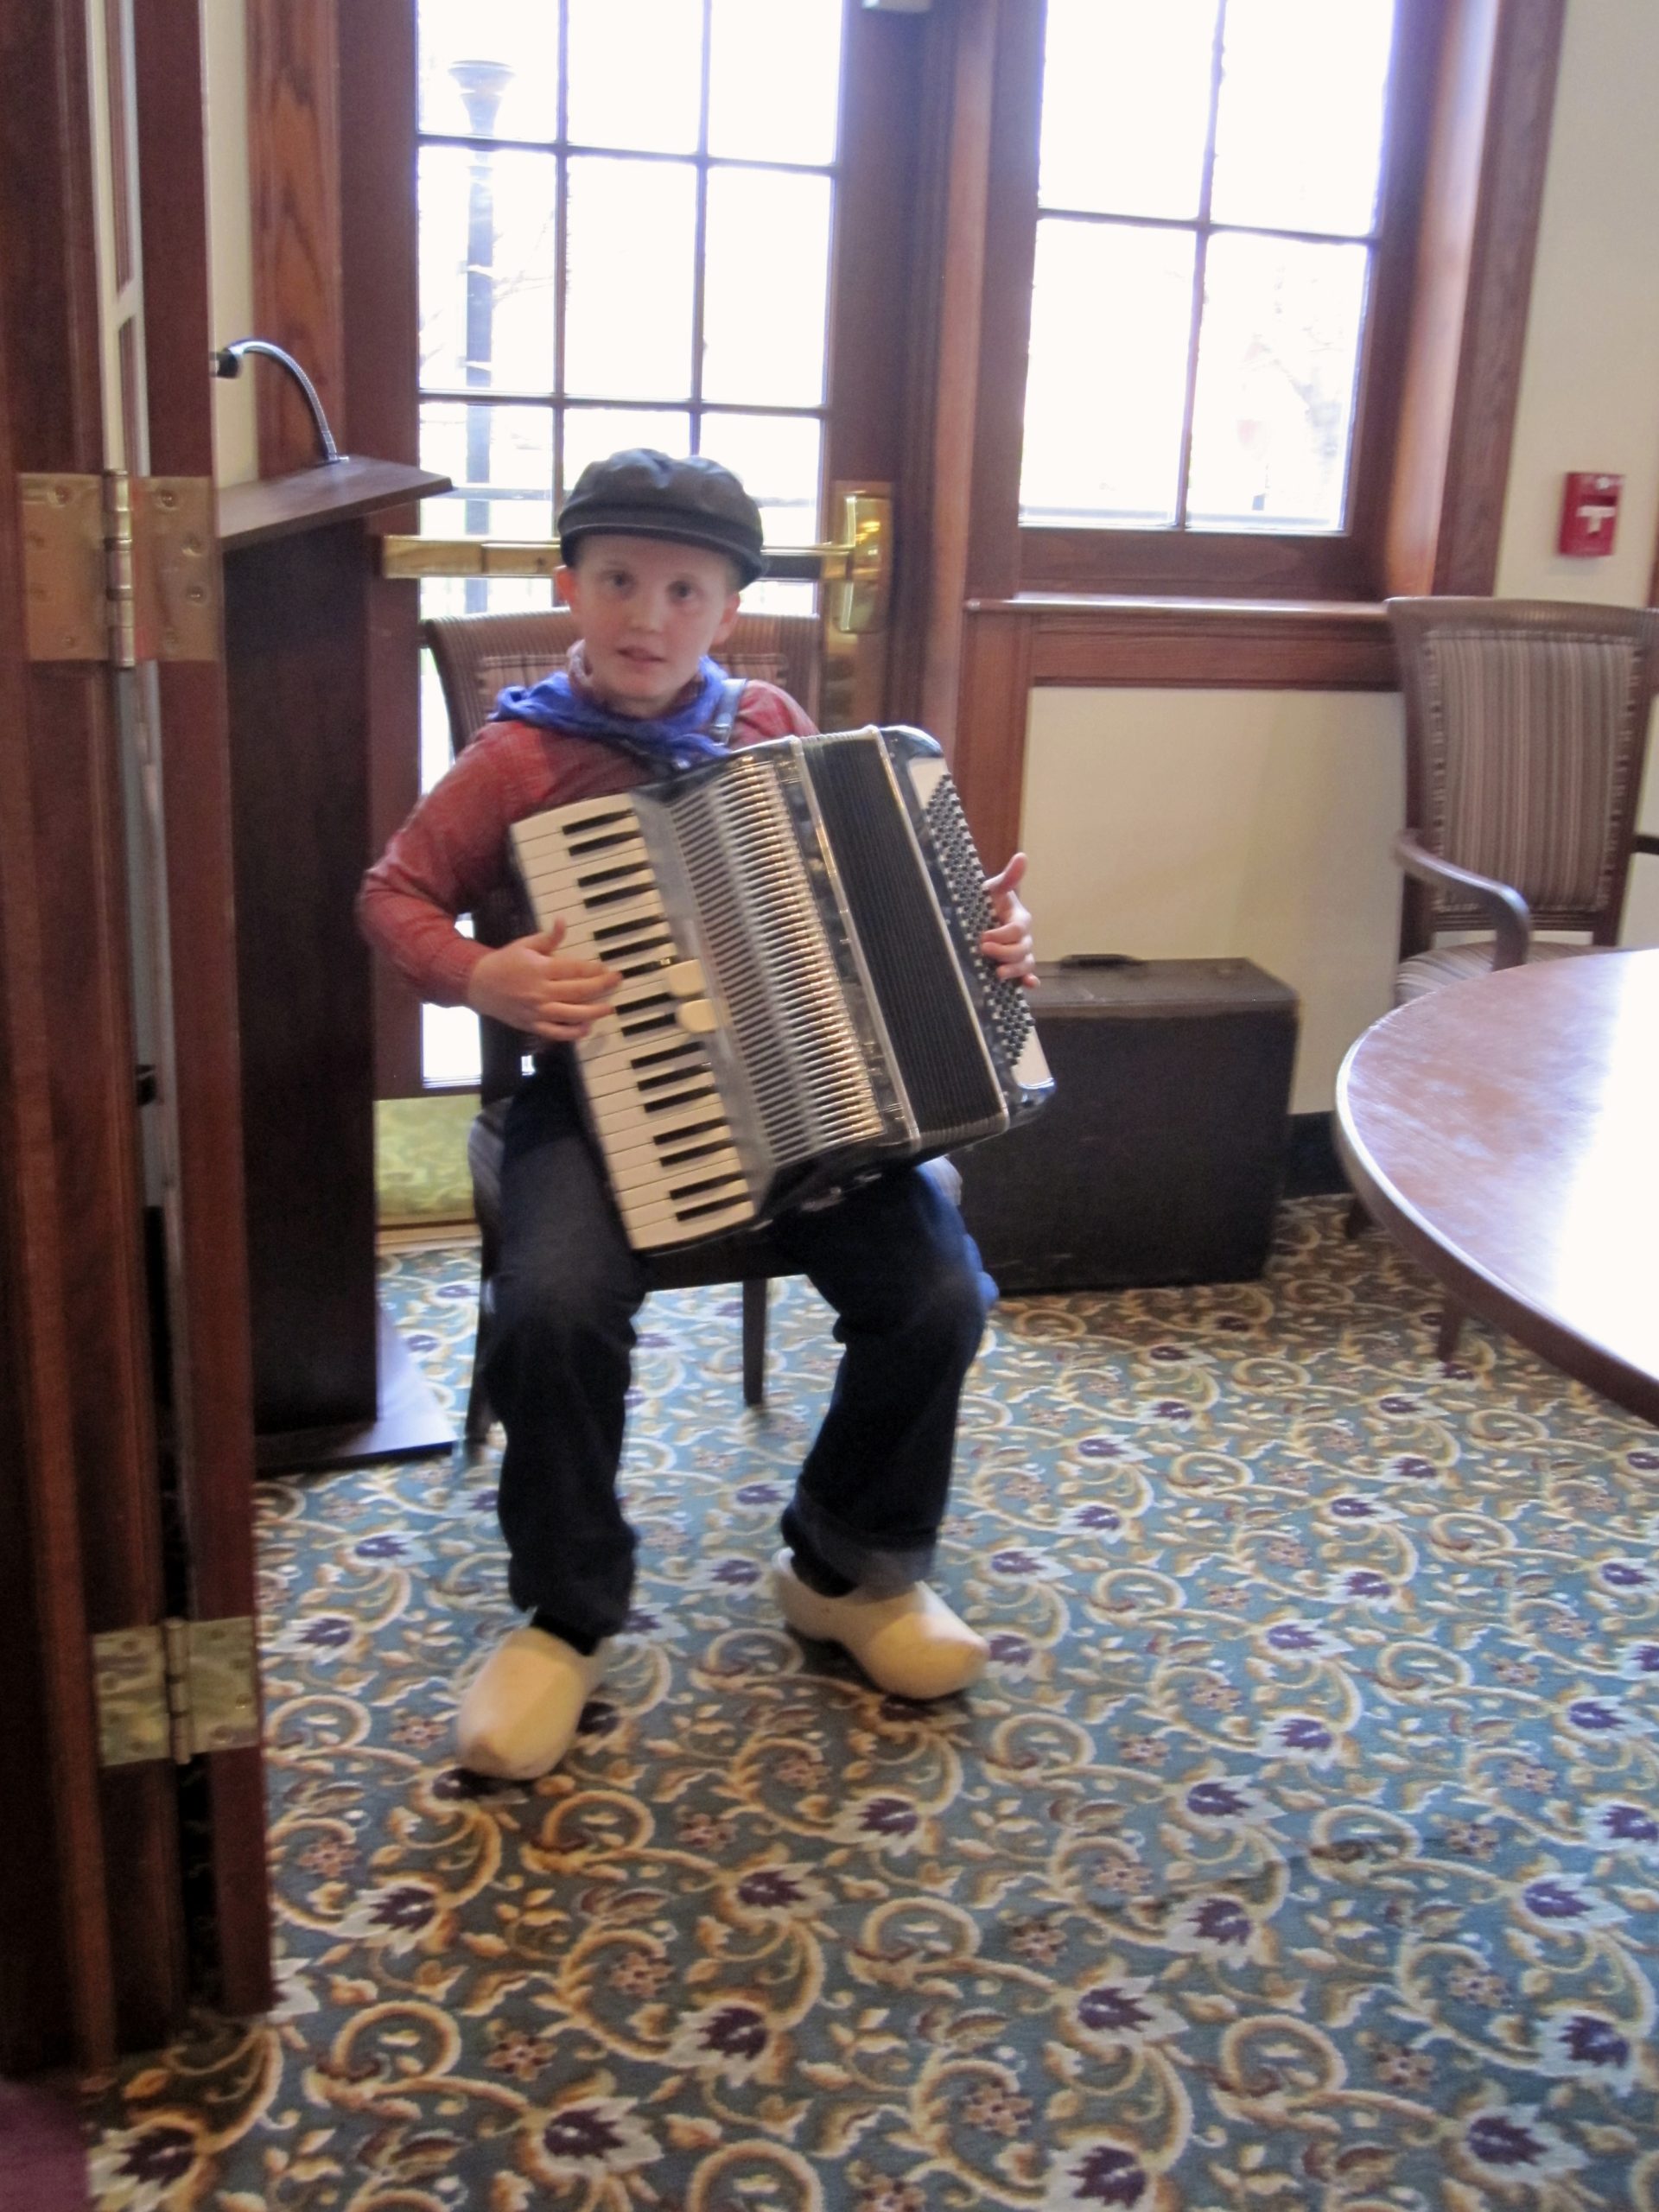 Max Thompson at age 11, royal amsterdam hotel, pella, IA, accordionist, accordion, dutch